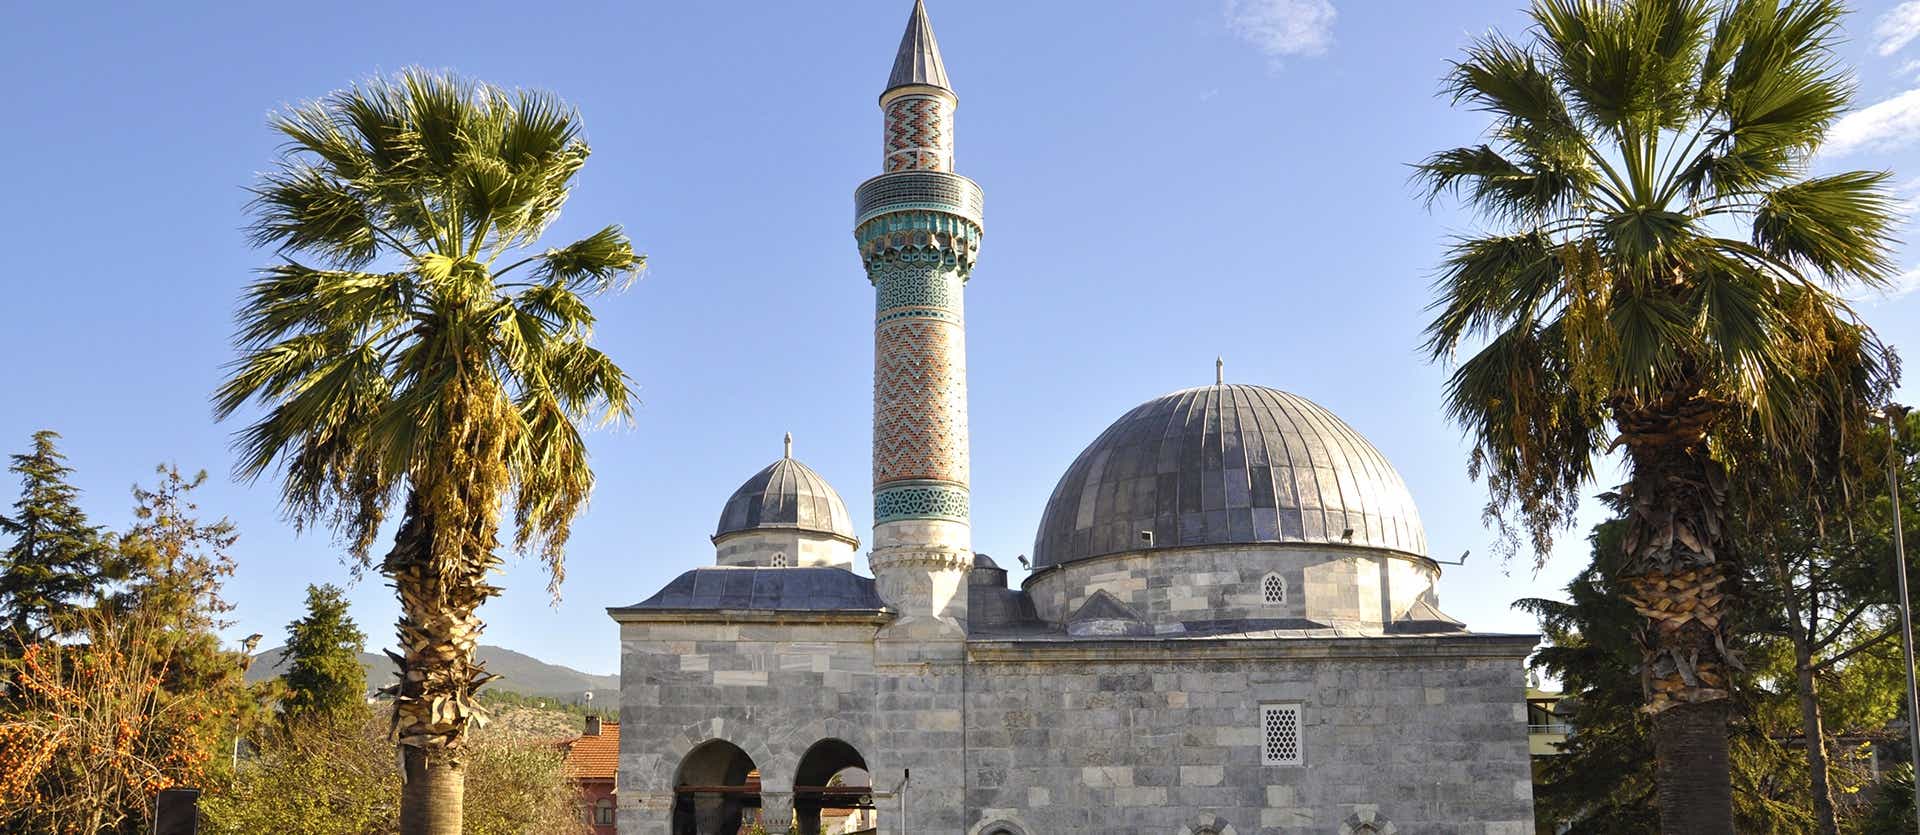 Gran Mezquita de Iznik <span class="iconos separador"></span> Bursa 